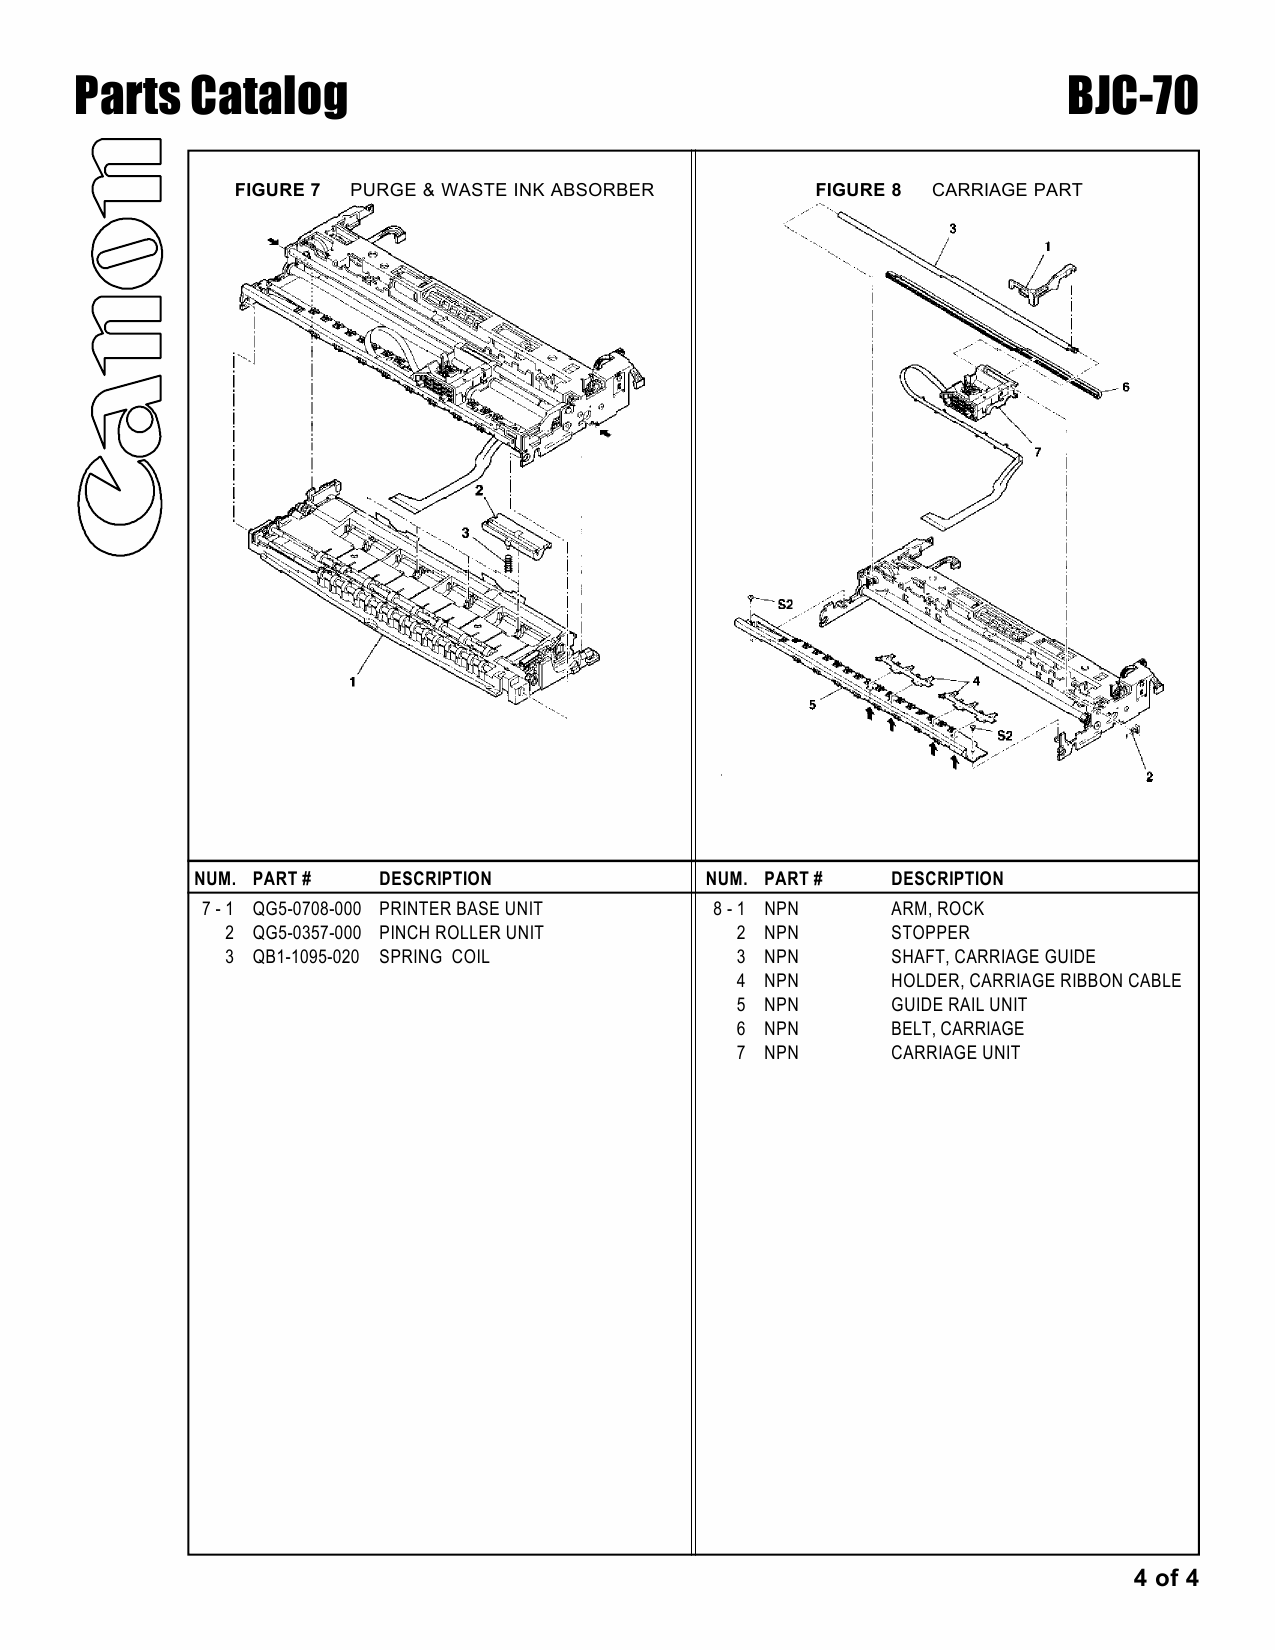 Canon BubbleJet BJC-70 Parts Catalog Manual-5